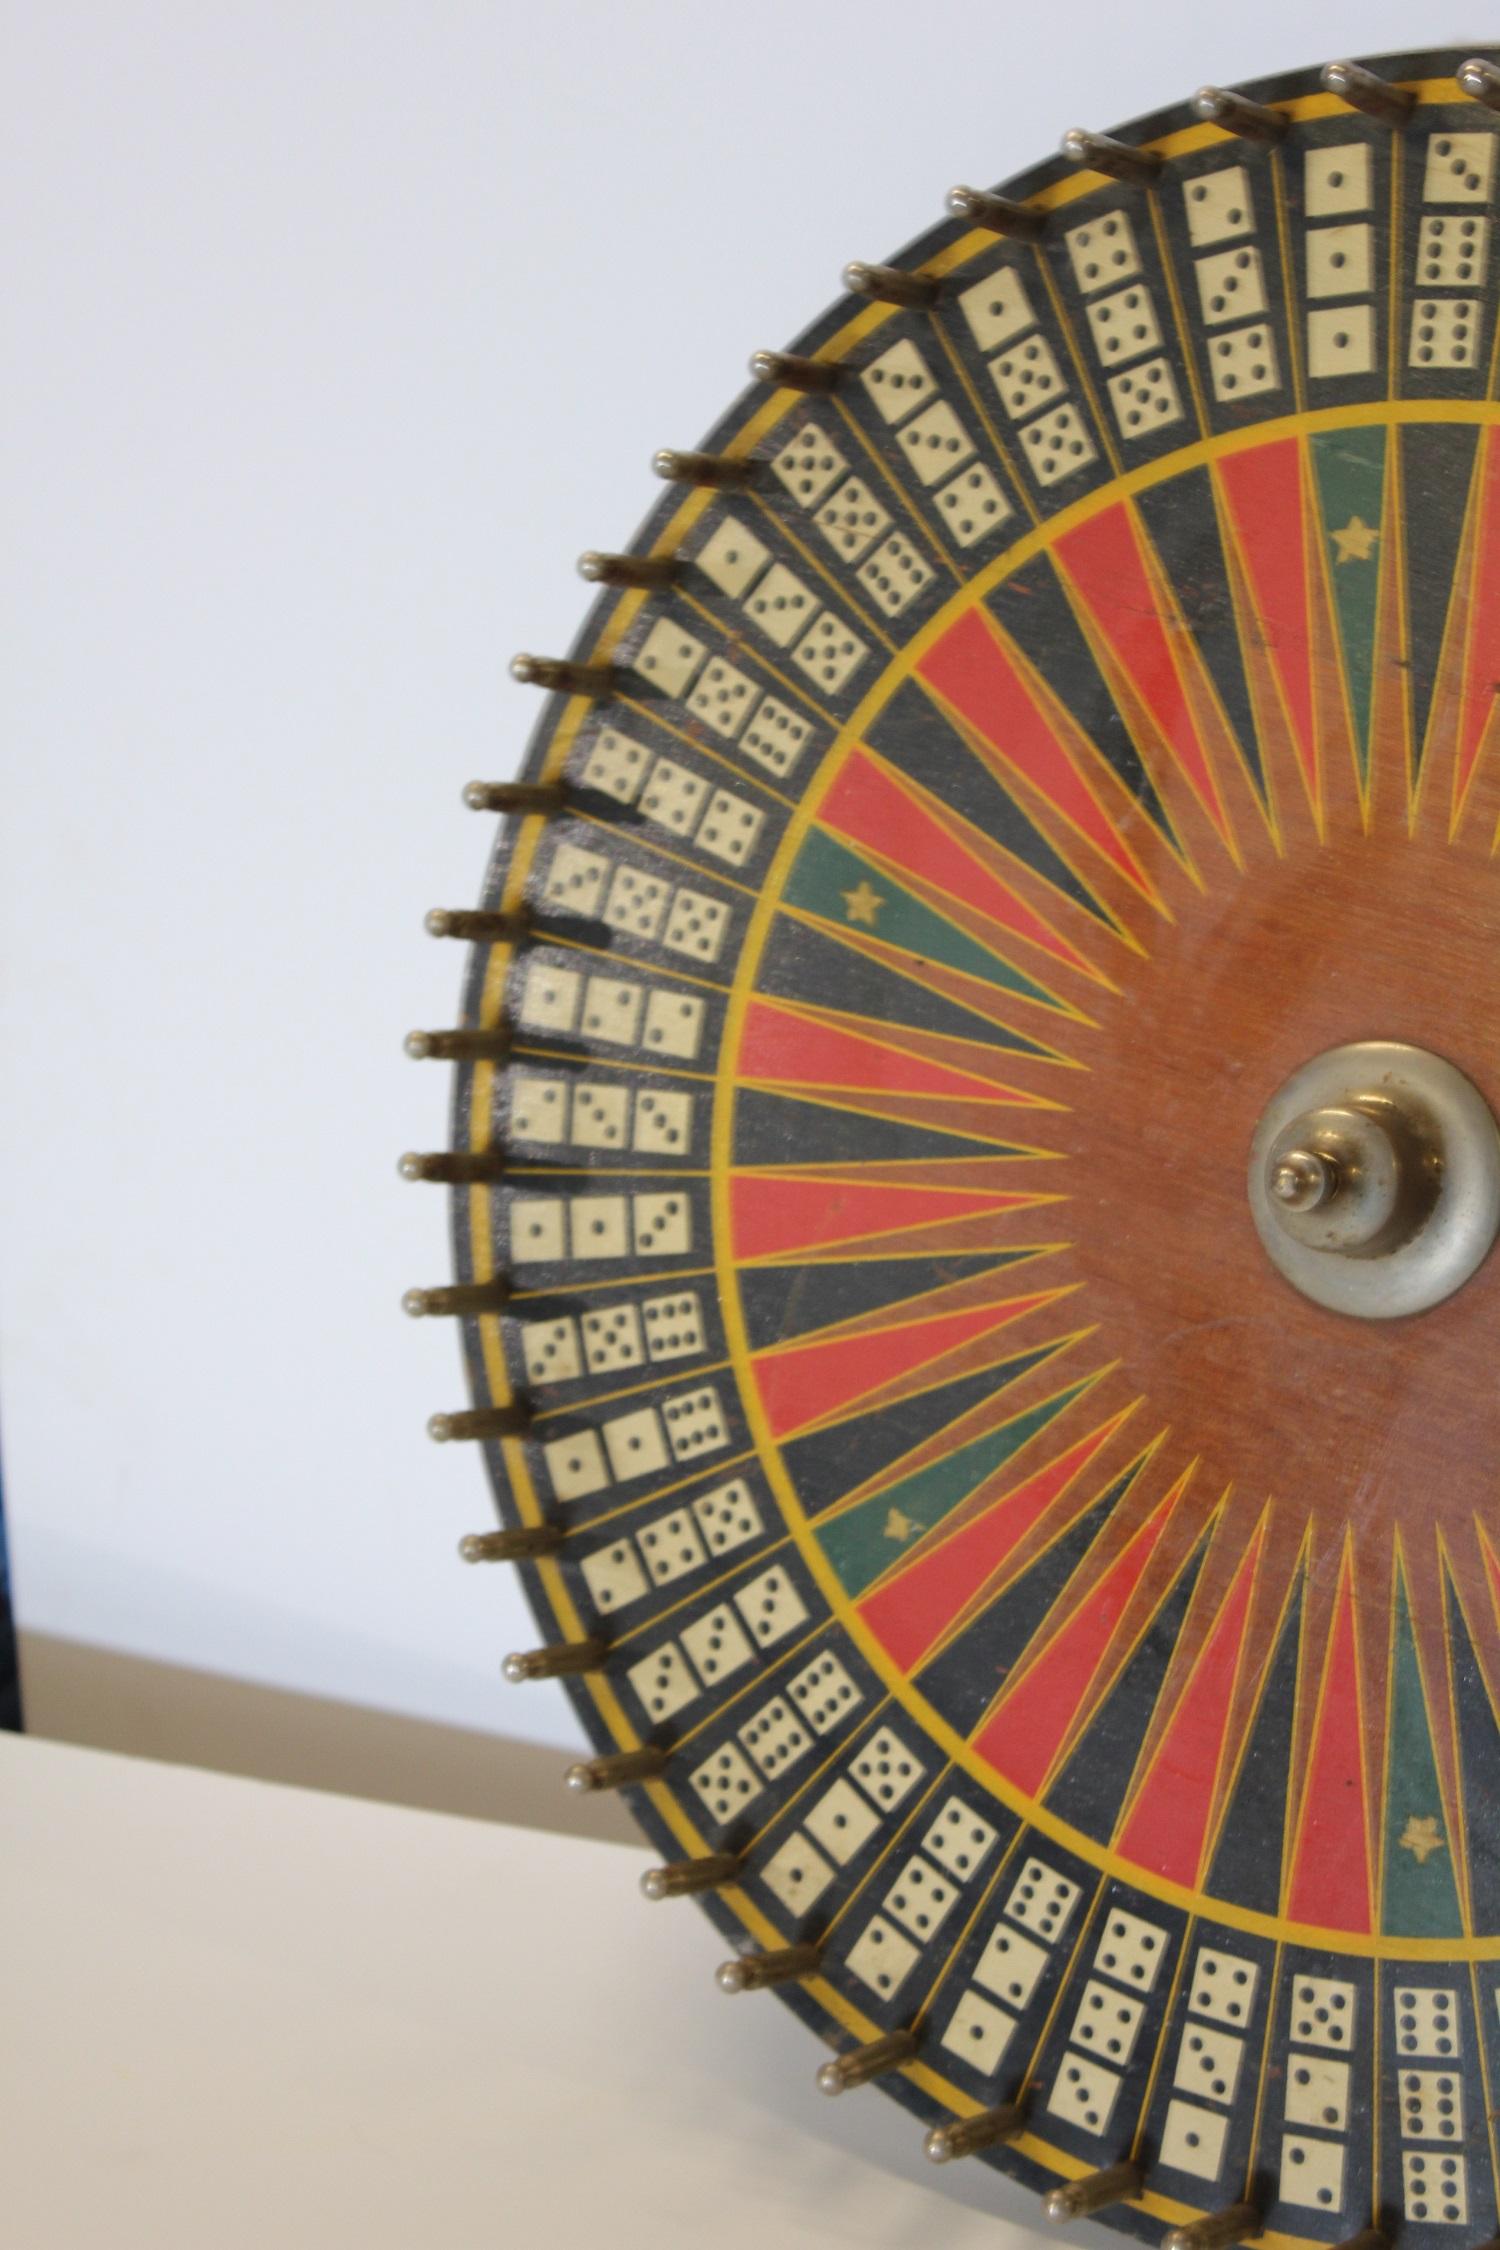 Antique carnival game wheel.